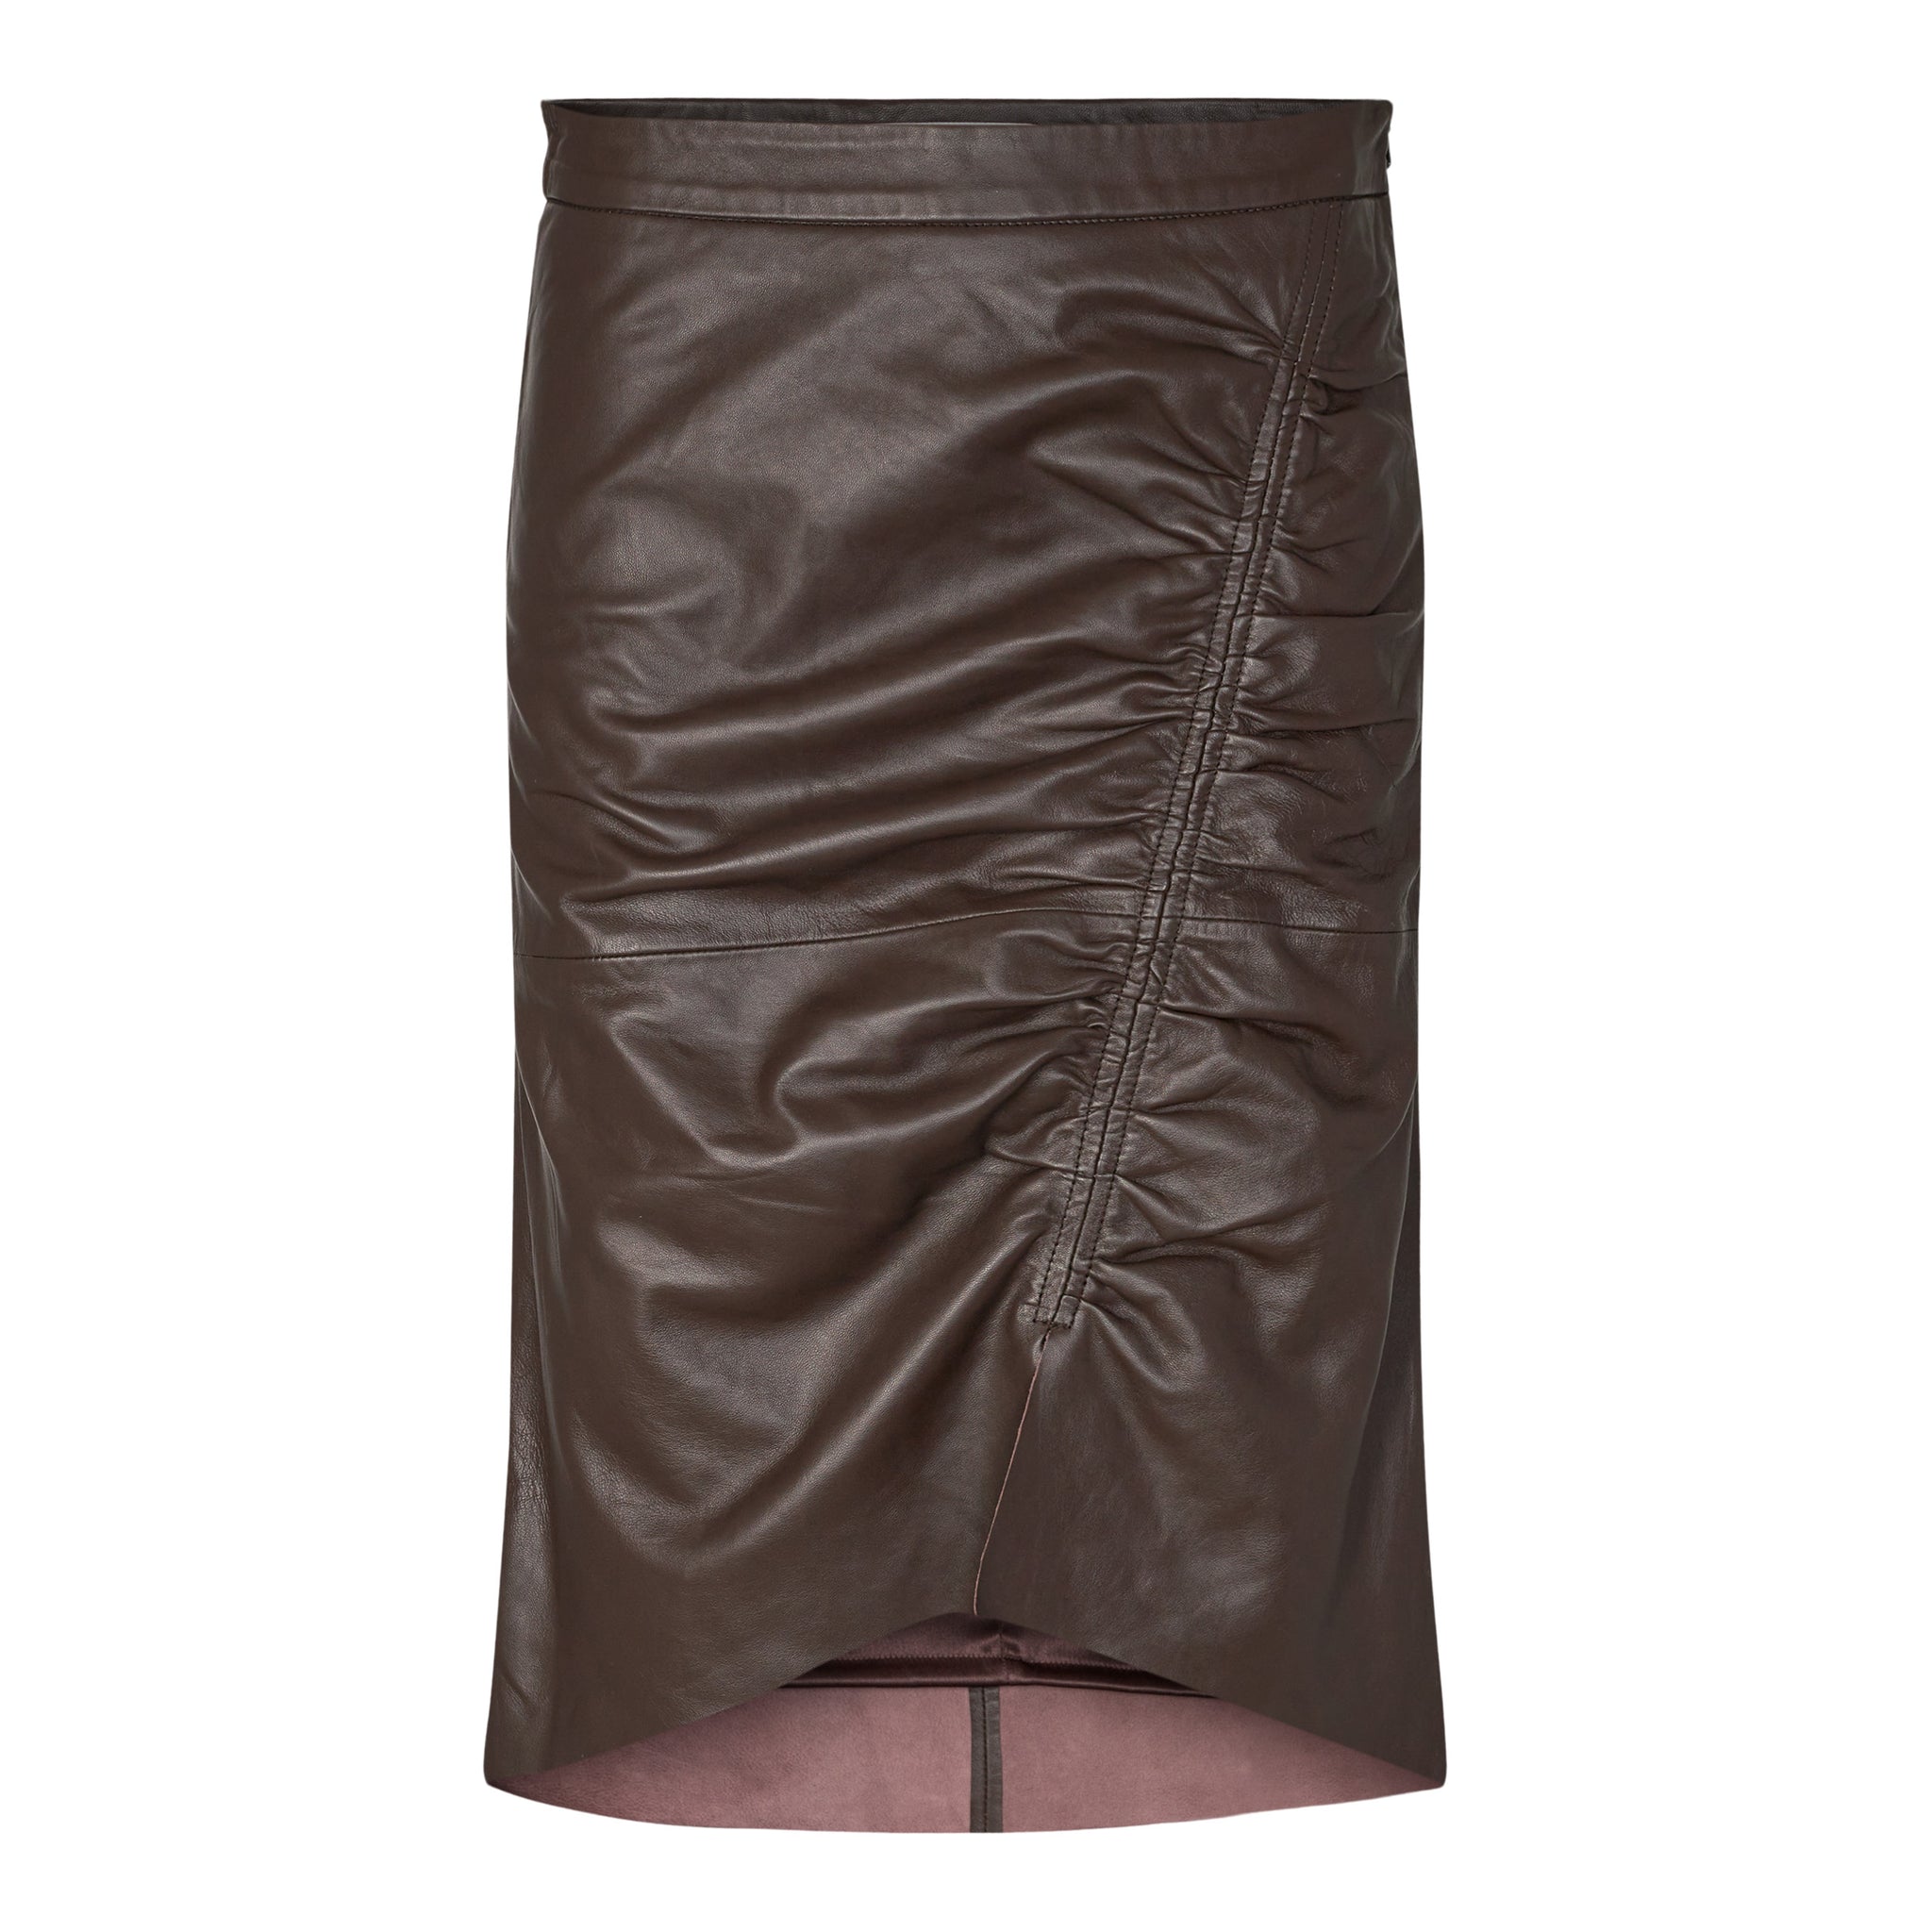 Harvie Leather Skirt Brown